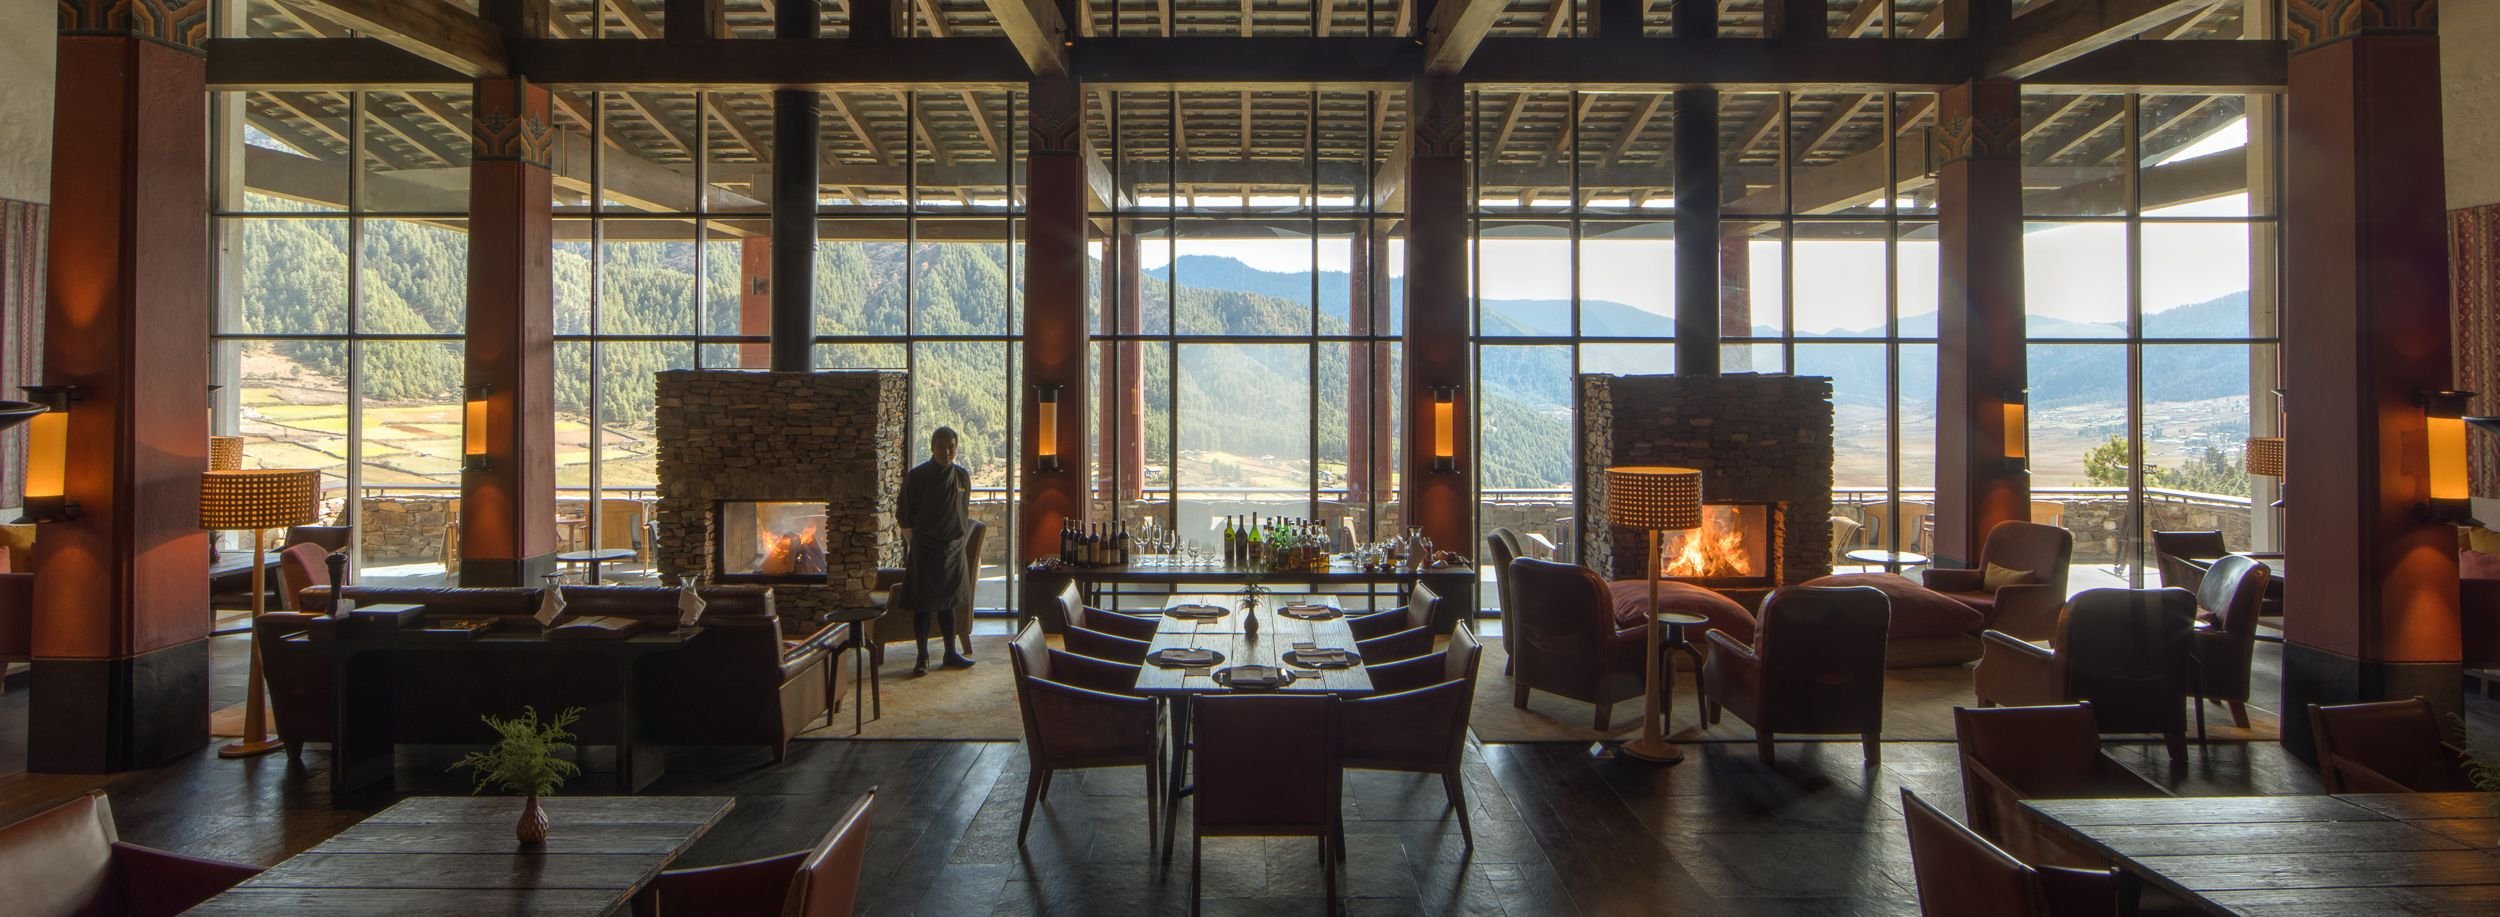 Gangtey Lodge - Hotel Windows - The Most Perfect View (5).jpg